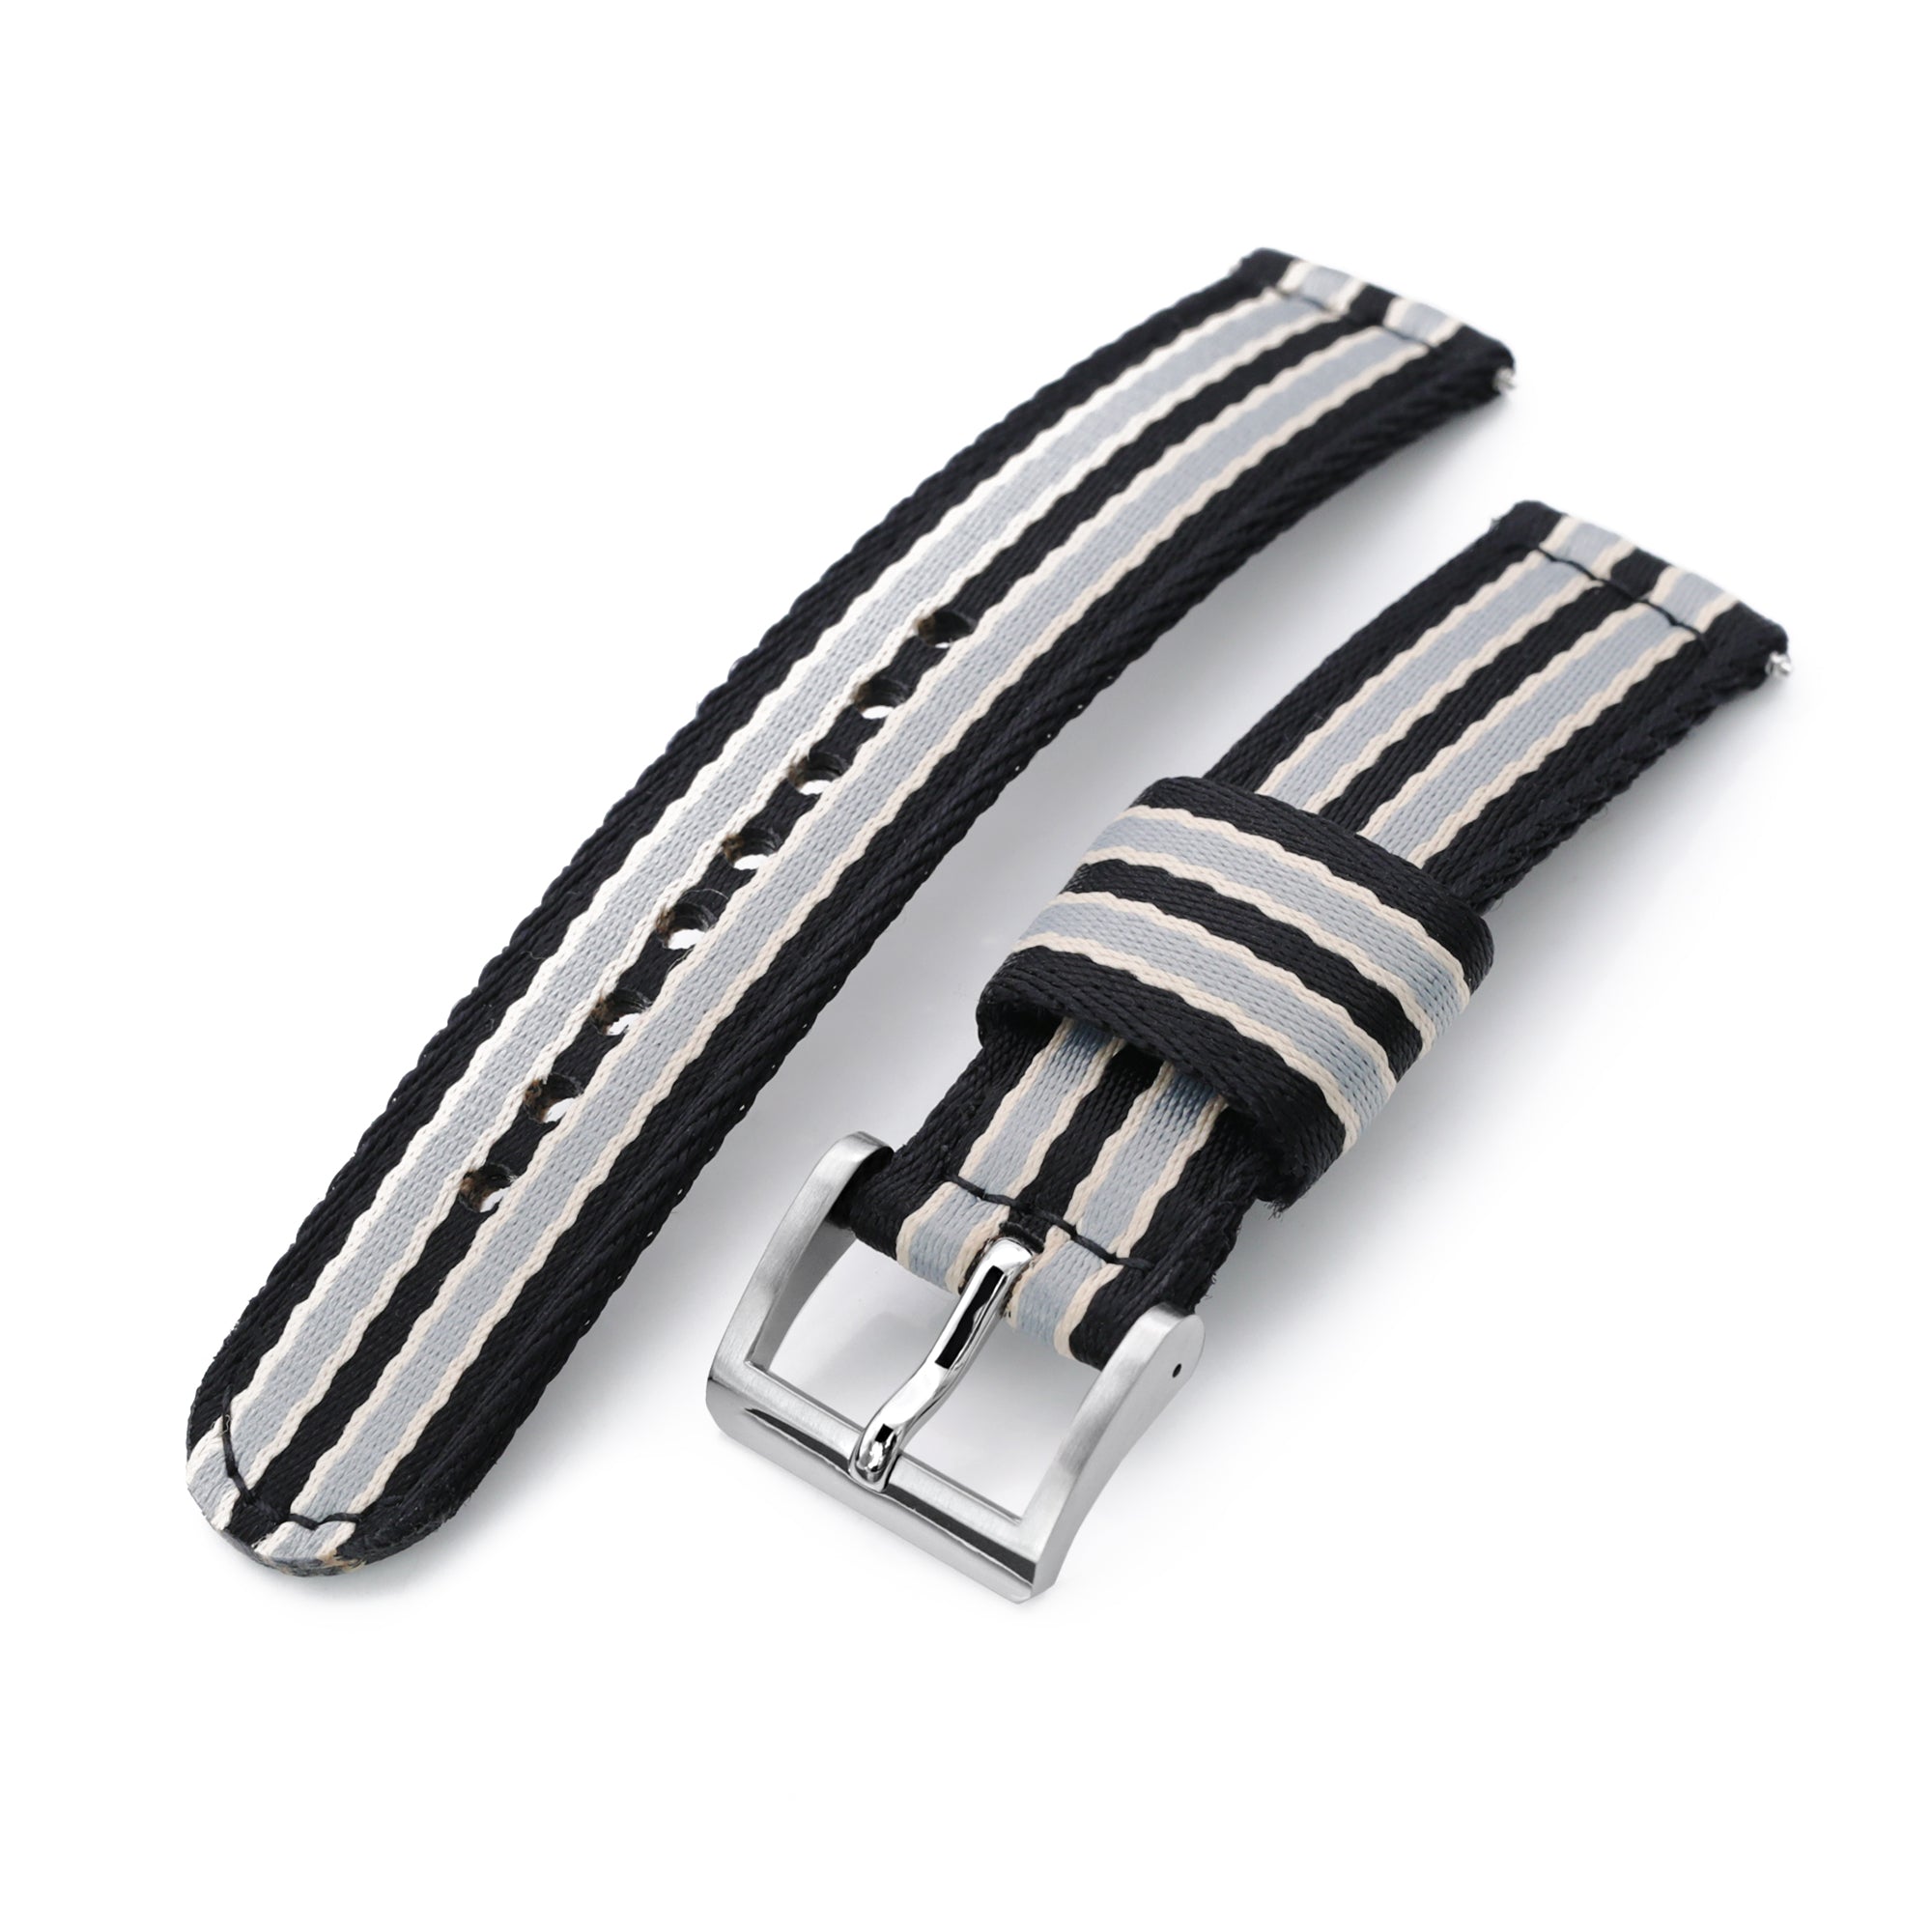 2-pcs Seatbelt Nylon Watch Band, Black, Grey and Khaki Stripes, Polished Buckle Strapcode Watch Bands